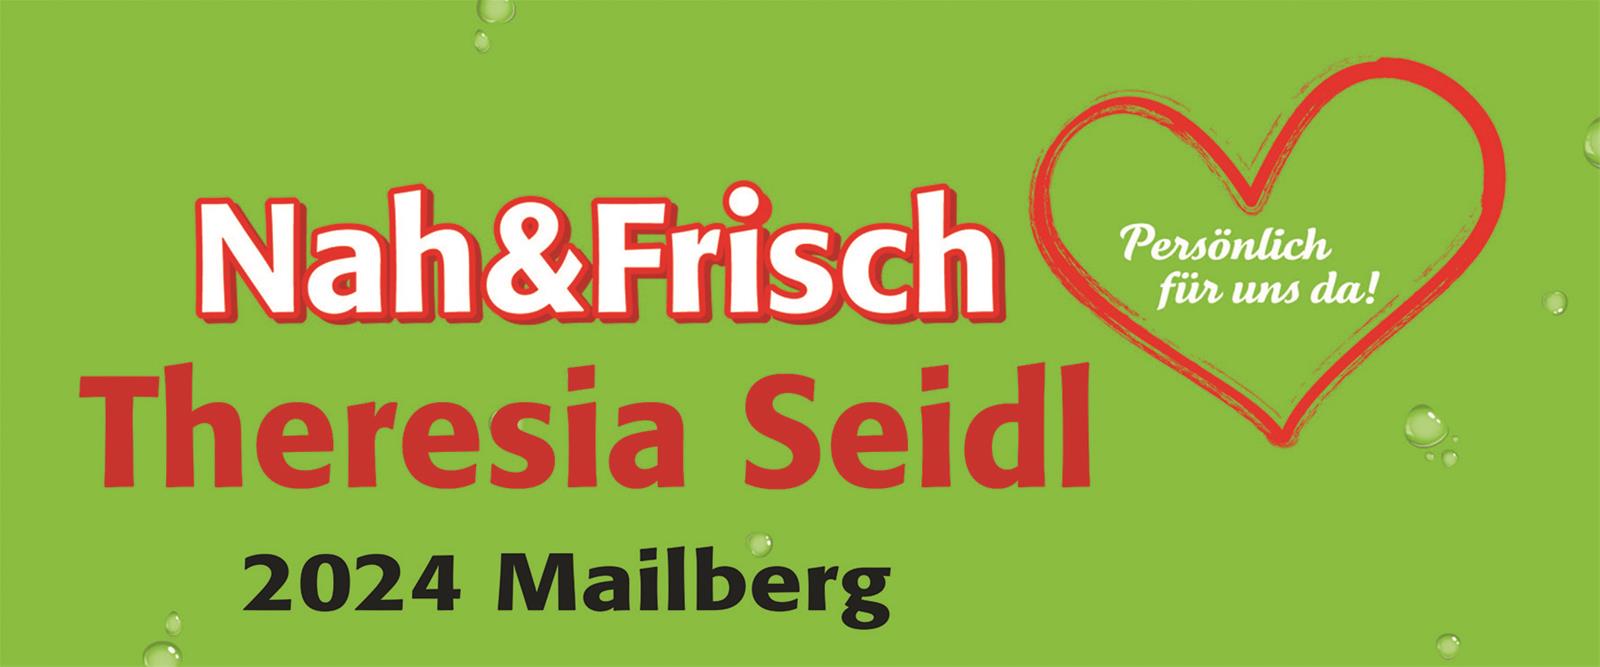 Nah & Frisch 
Theresia Seidl